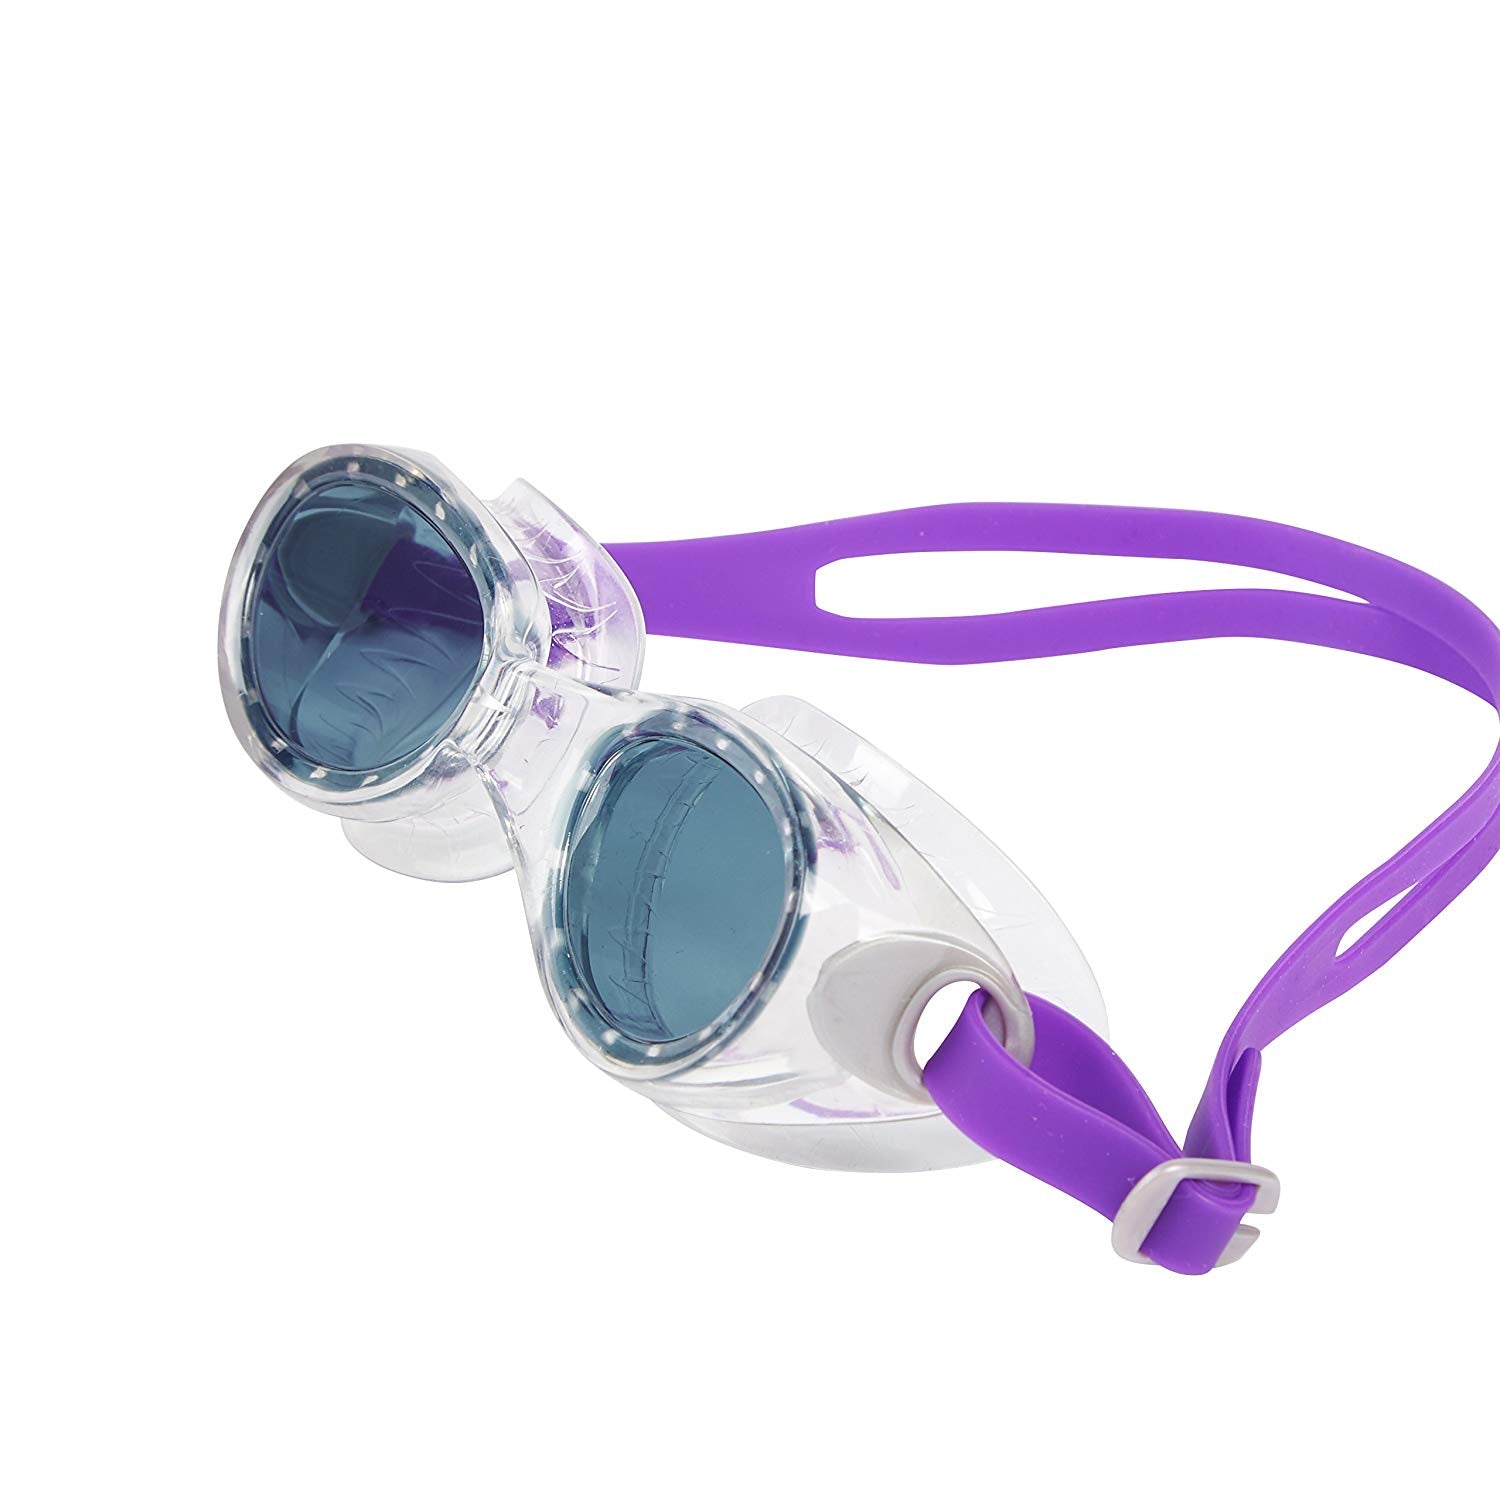 Speedo Female-Adult Futura Classic Female Goggles (Purple/Smoke) - Best Price online Prokicksports.com